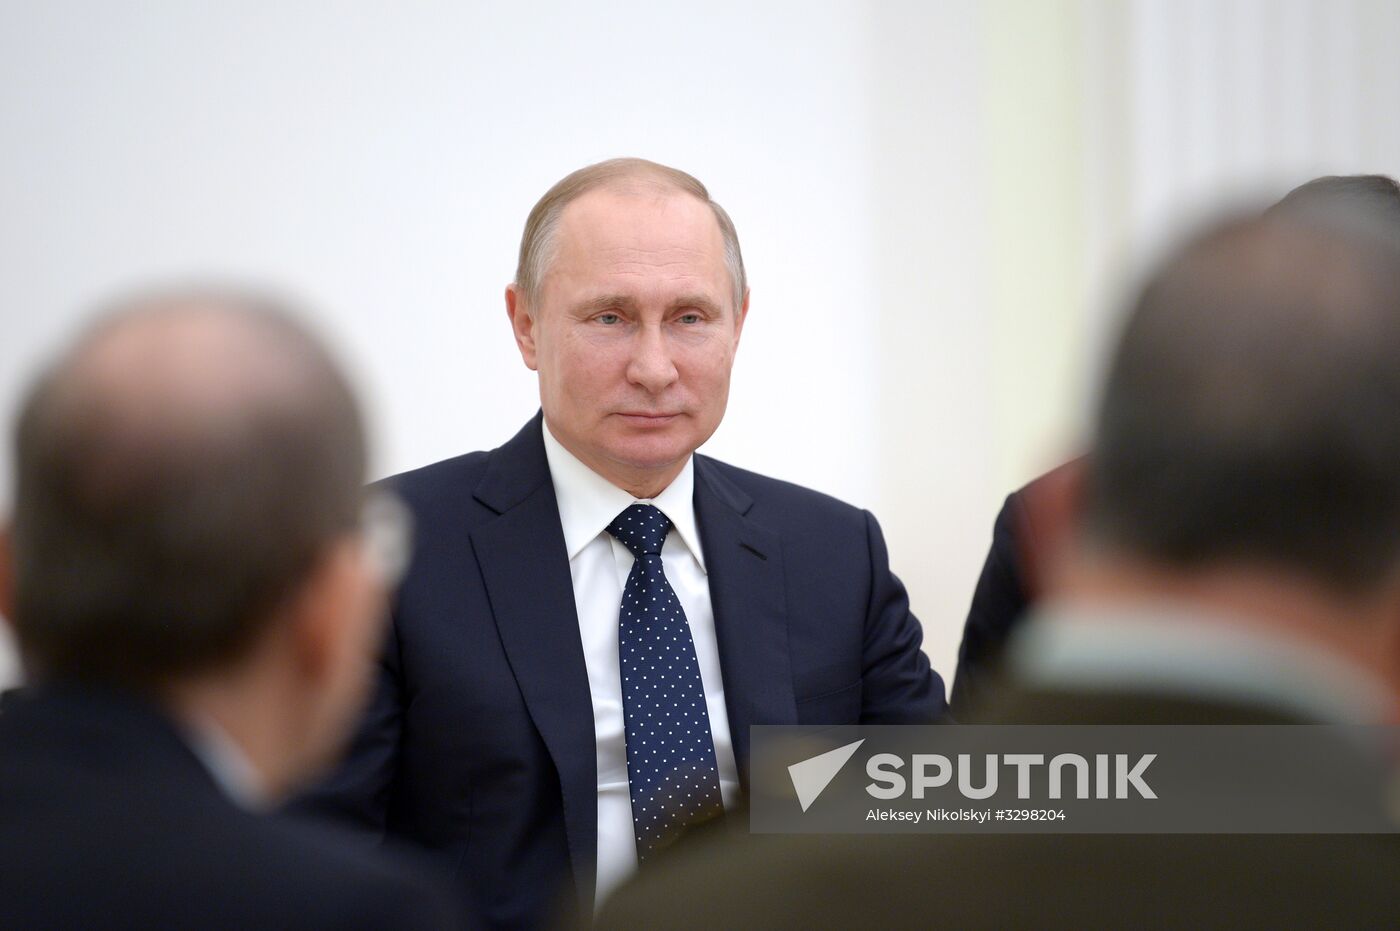 President Putin holds talks with King Abdallah II of Jordan